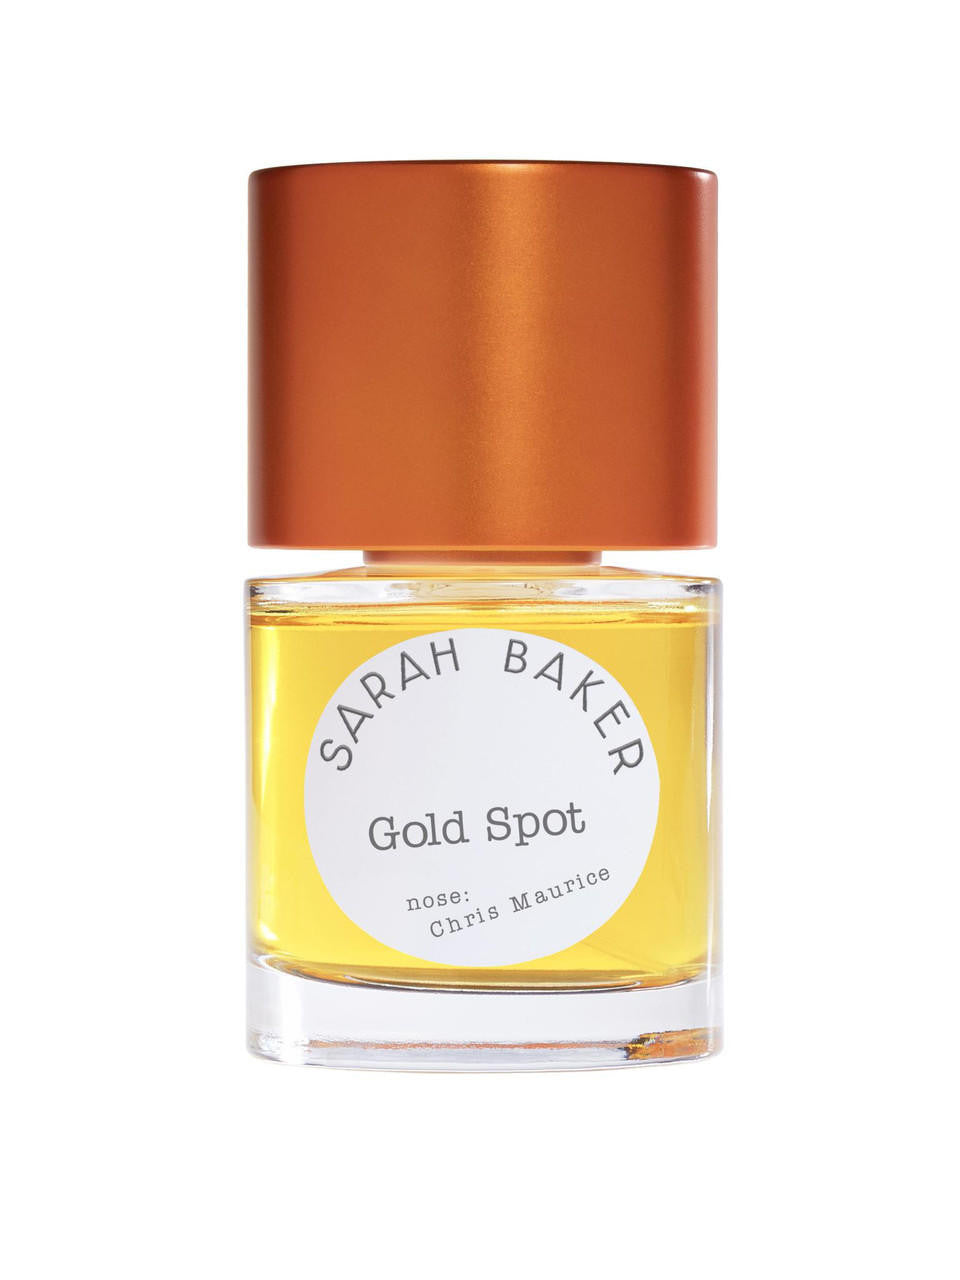  Sarah Baker Gold Spot Extrait de Parfum 